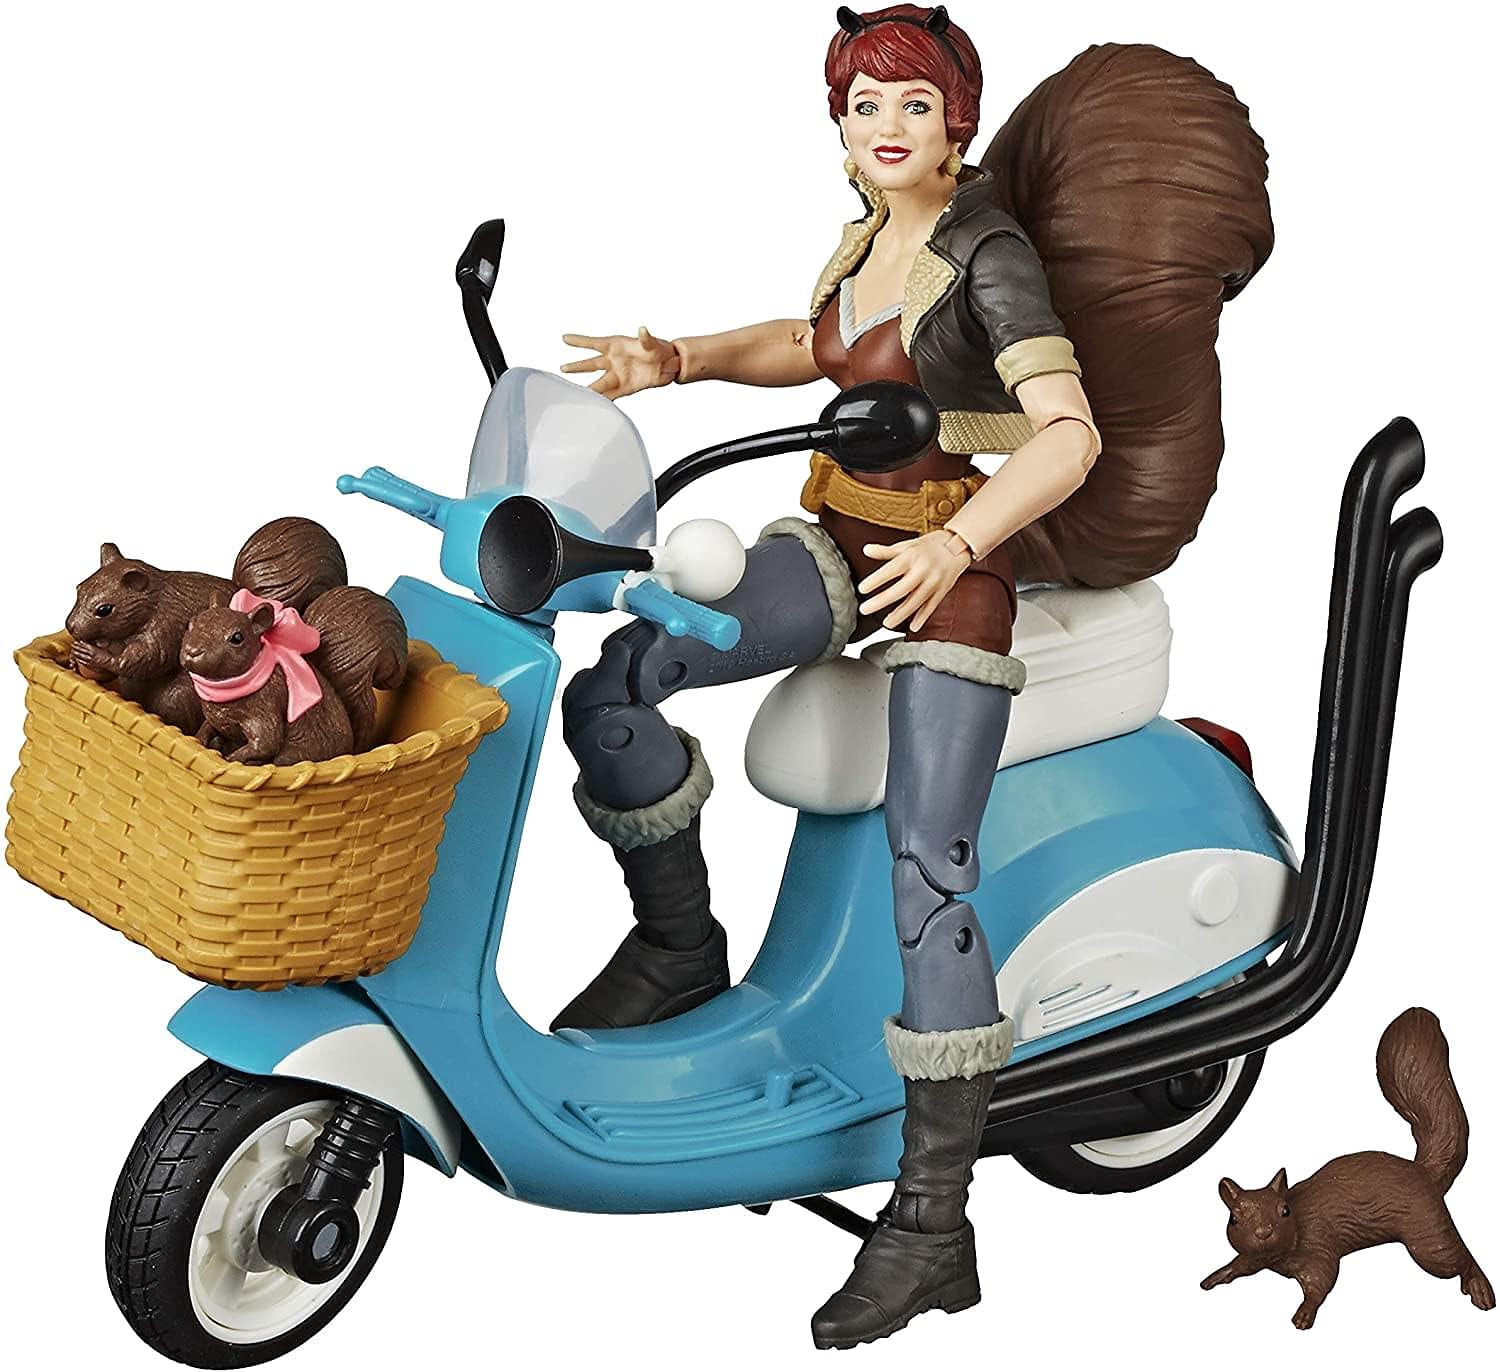 Hasbro Marvel Legends Series 15 cm große Unbeatable Squirrel Girl Action-Figur, Premium Design, enthält Fahrzeug und Accessoires